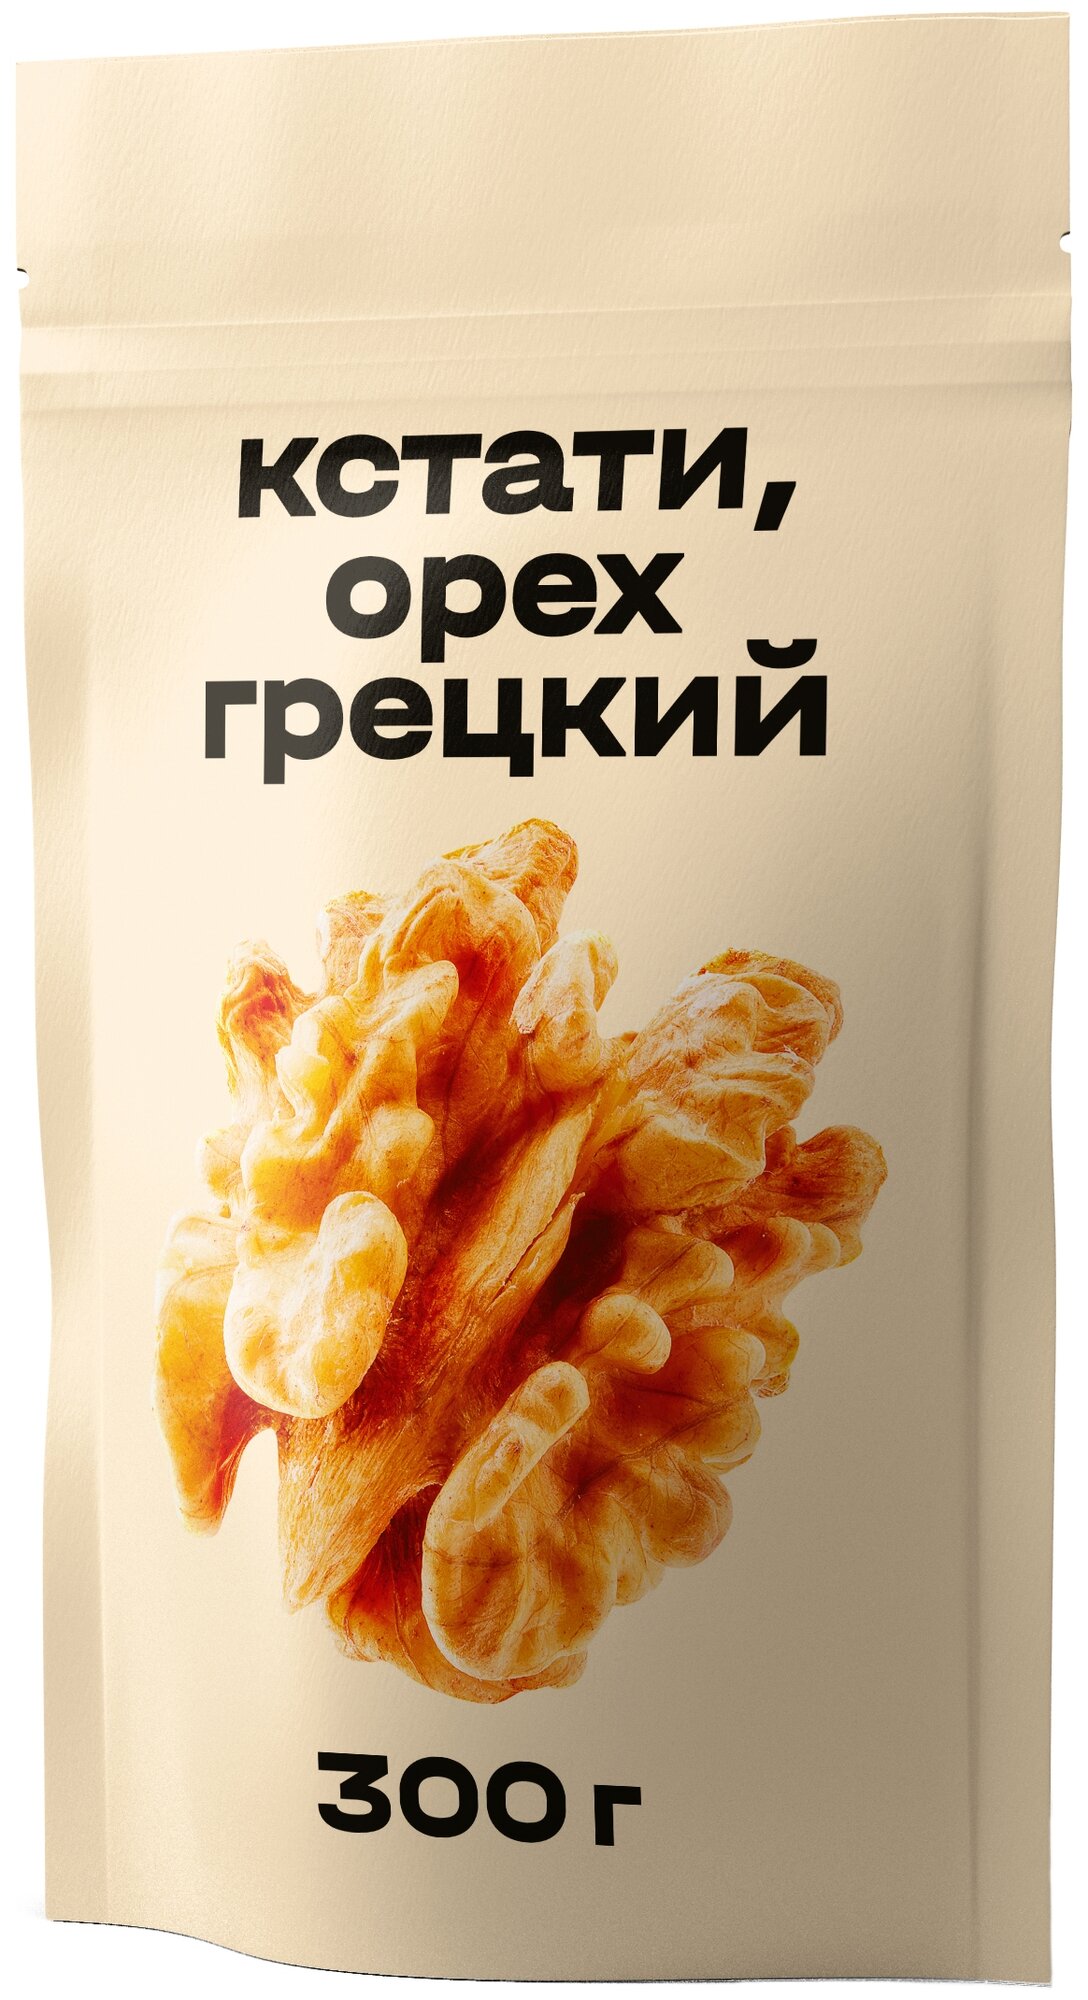 Грецкий орех Яндекс.Маркет Кстати, 300г - фотография № 2